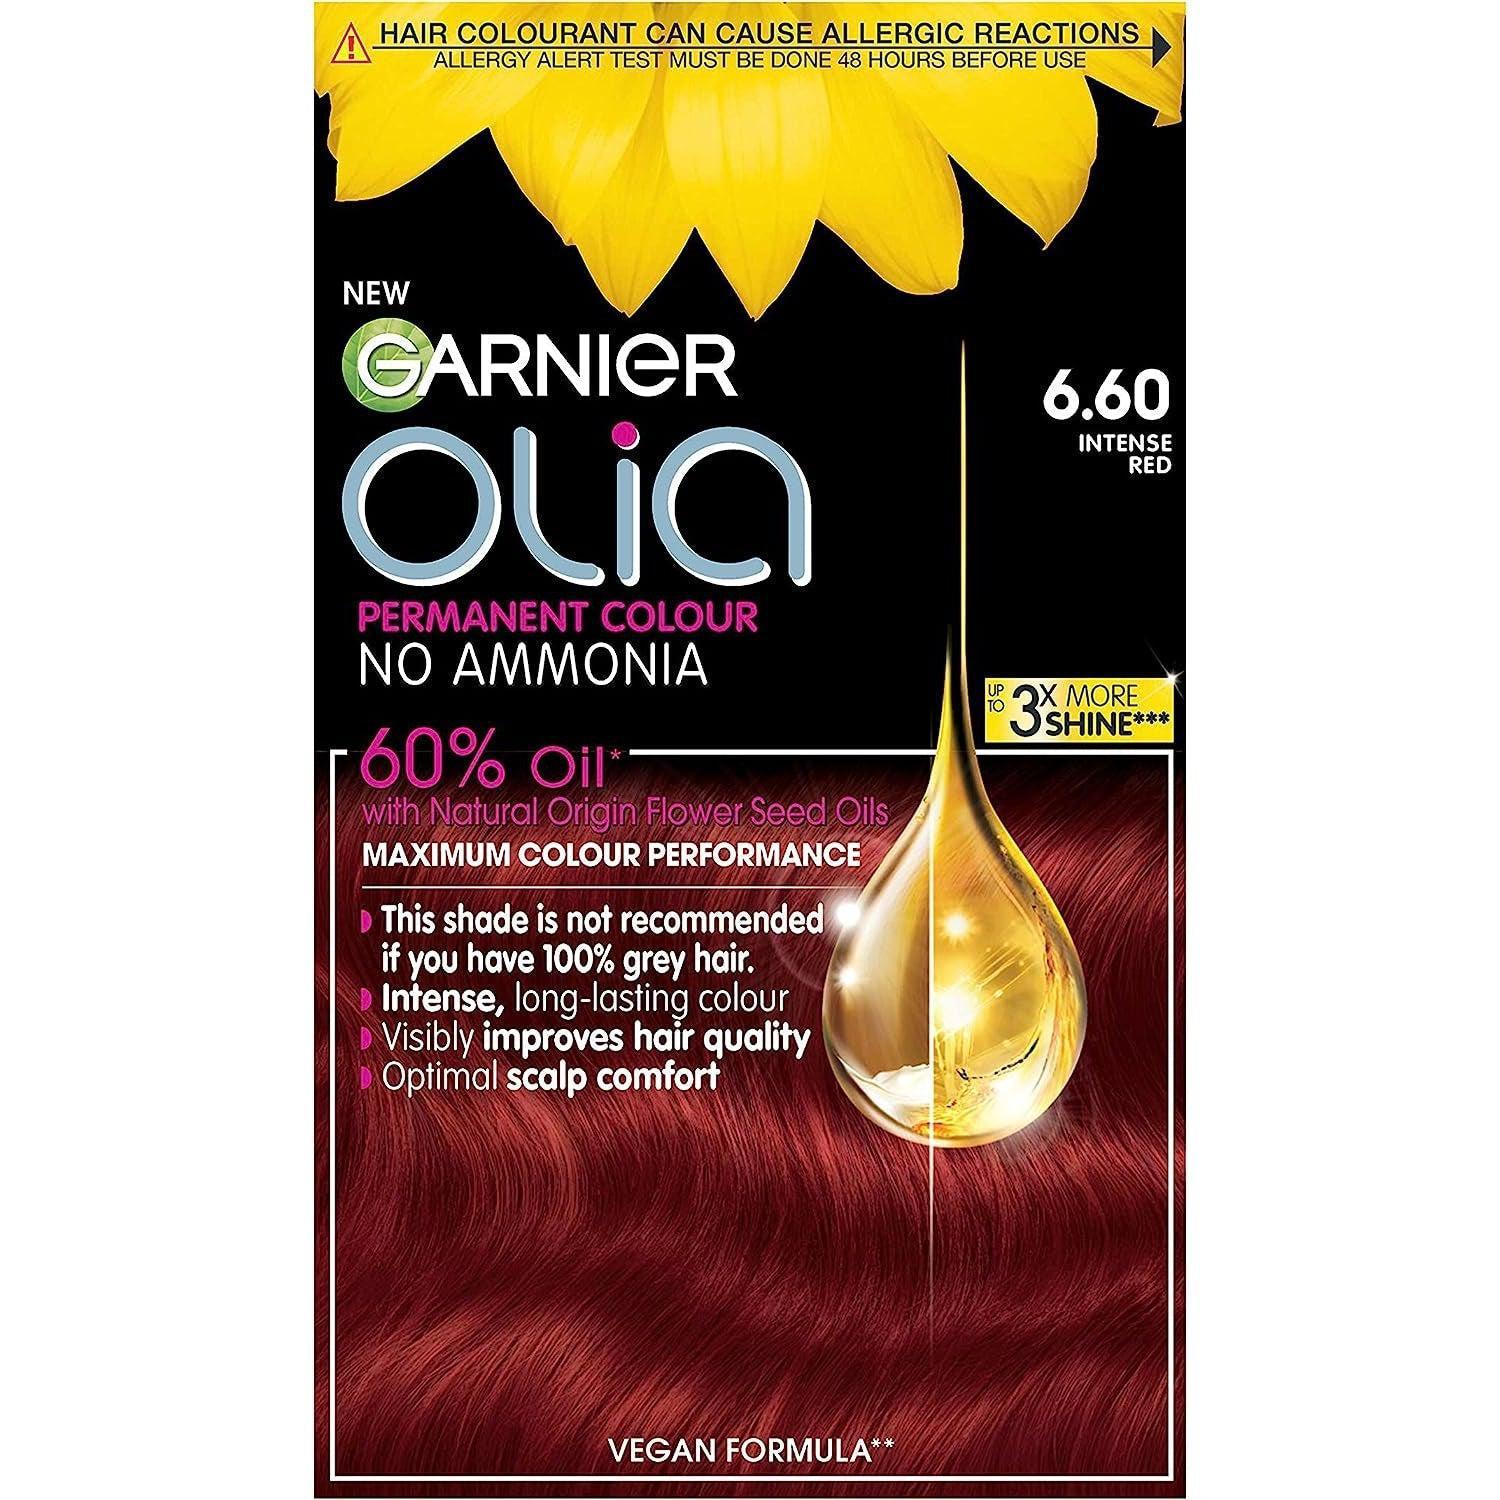 Garnier Olia 6.60 Intense Red Permanent Hair Dye - Healthxpress.ie